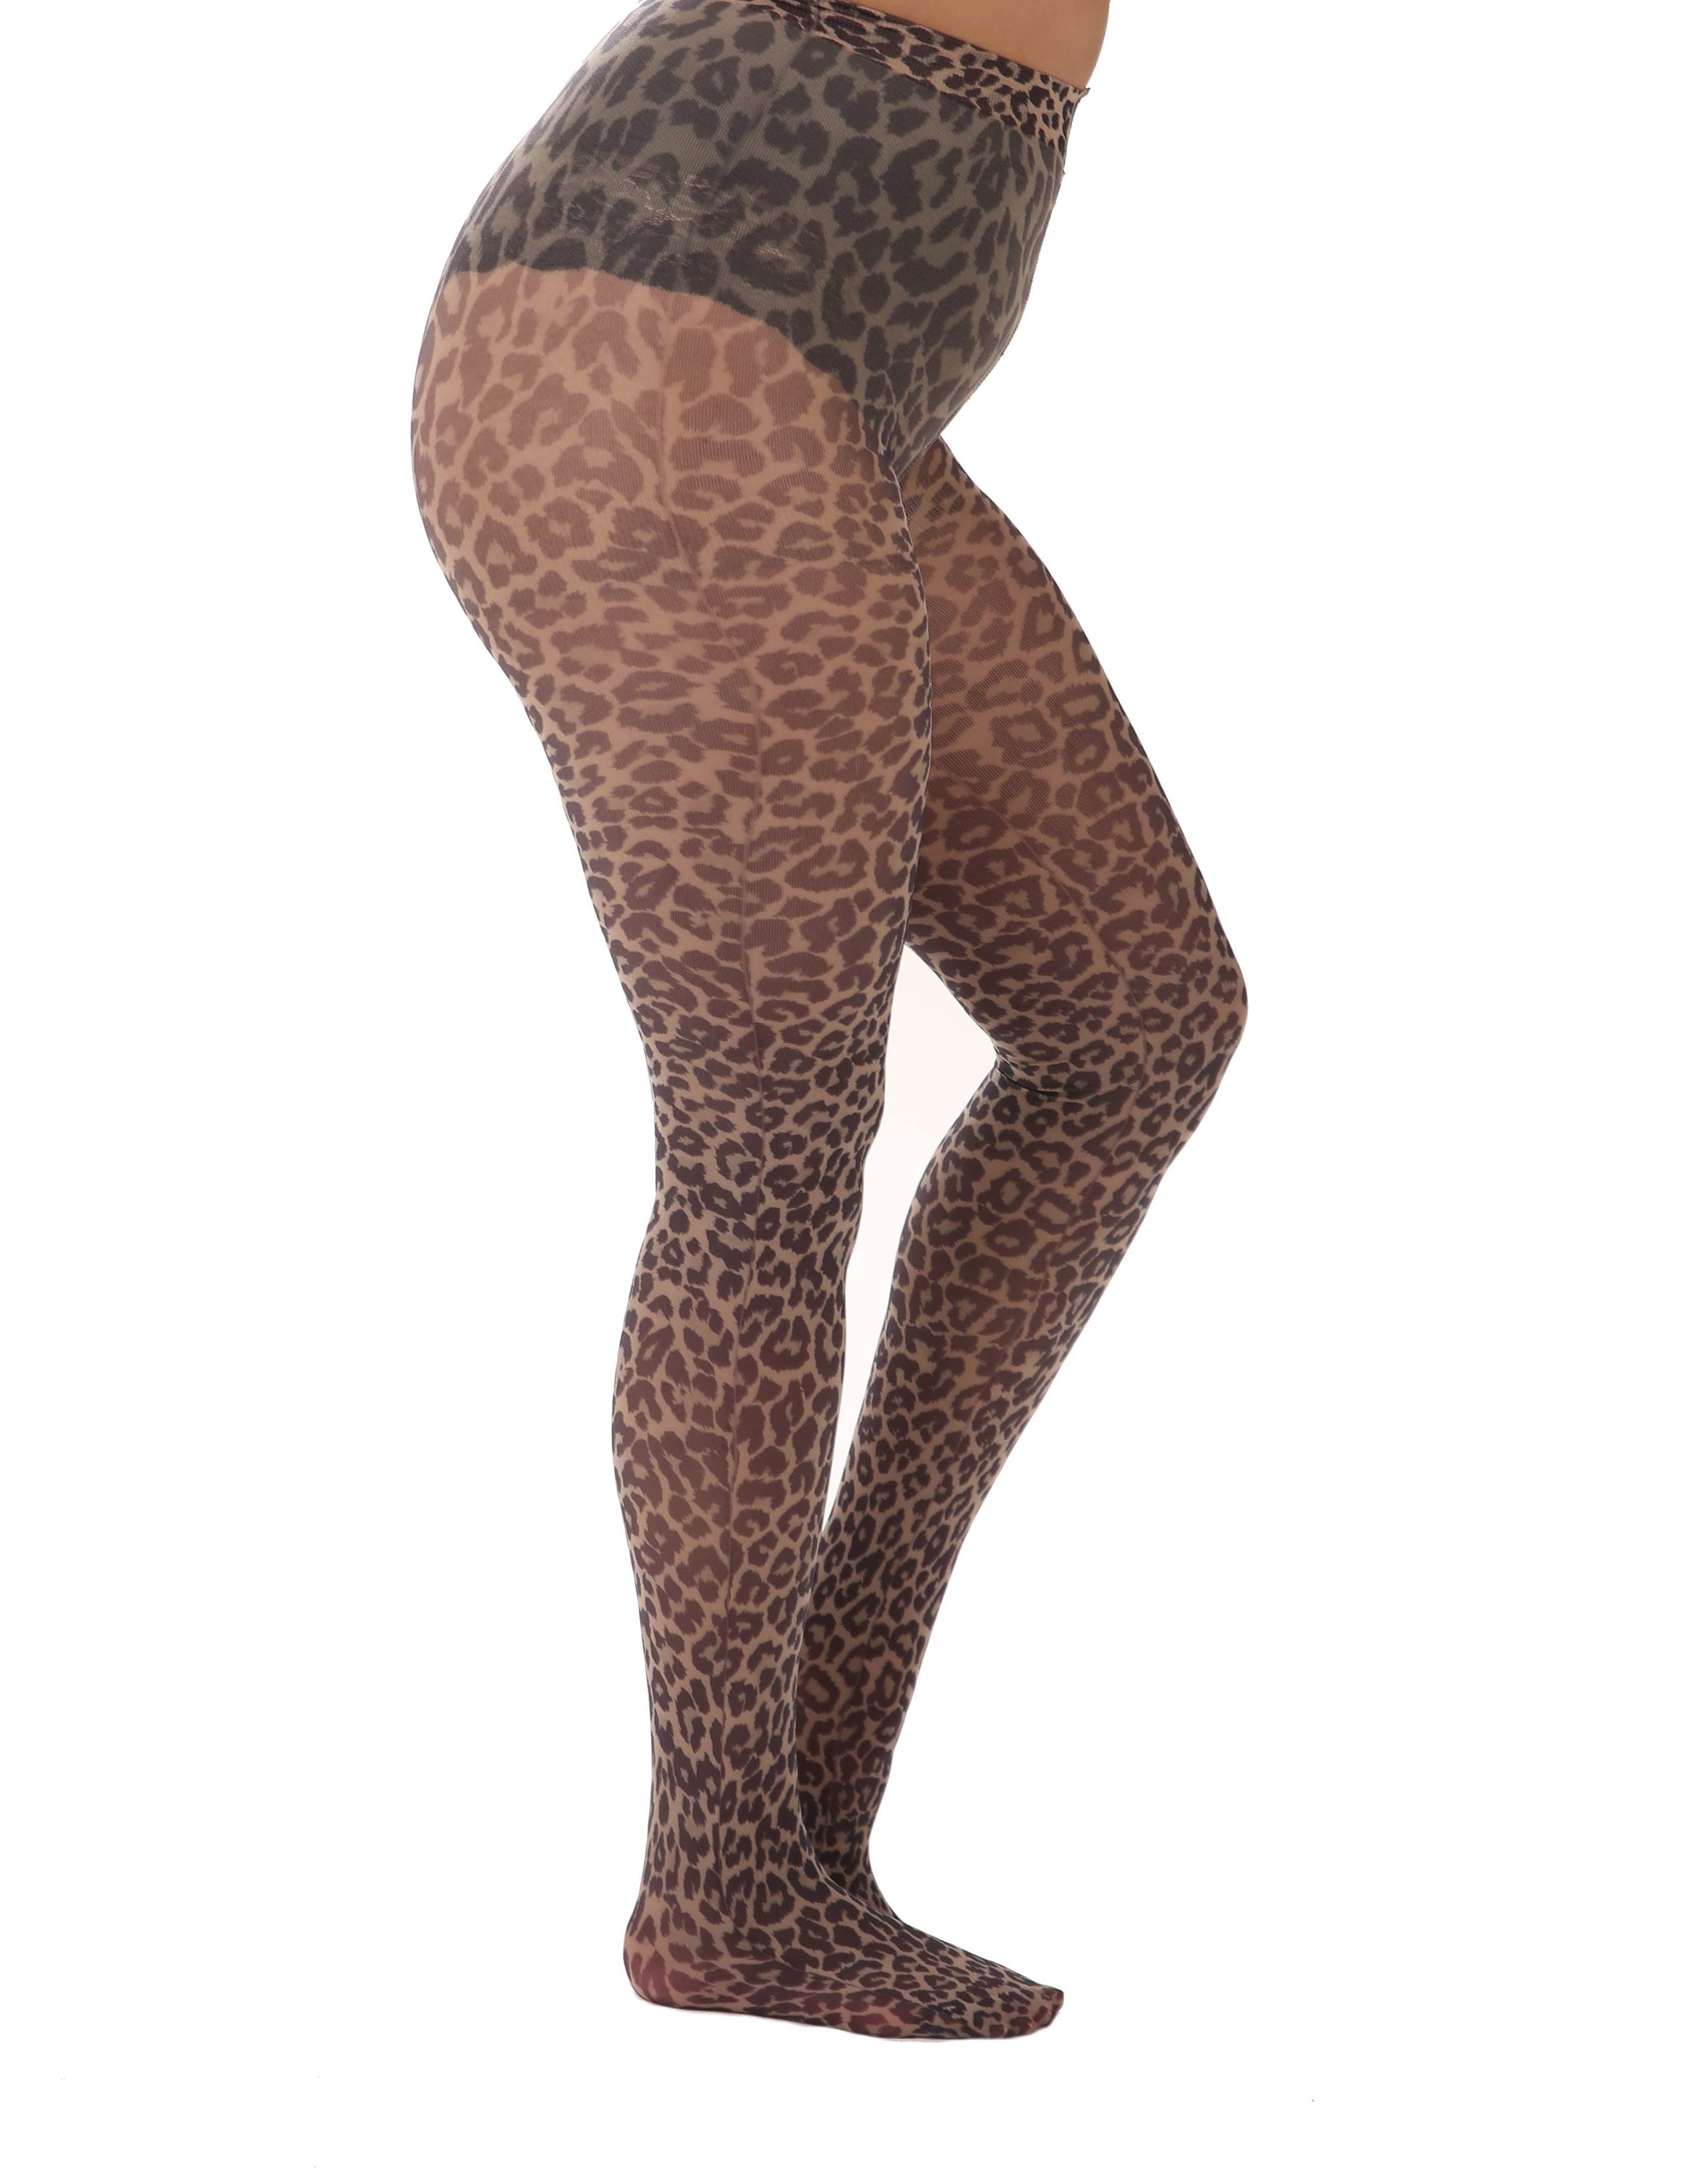 Plus Size Butter Leggings Women's Leopard Print Athleisure